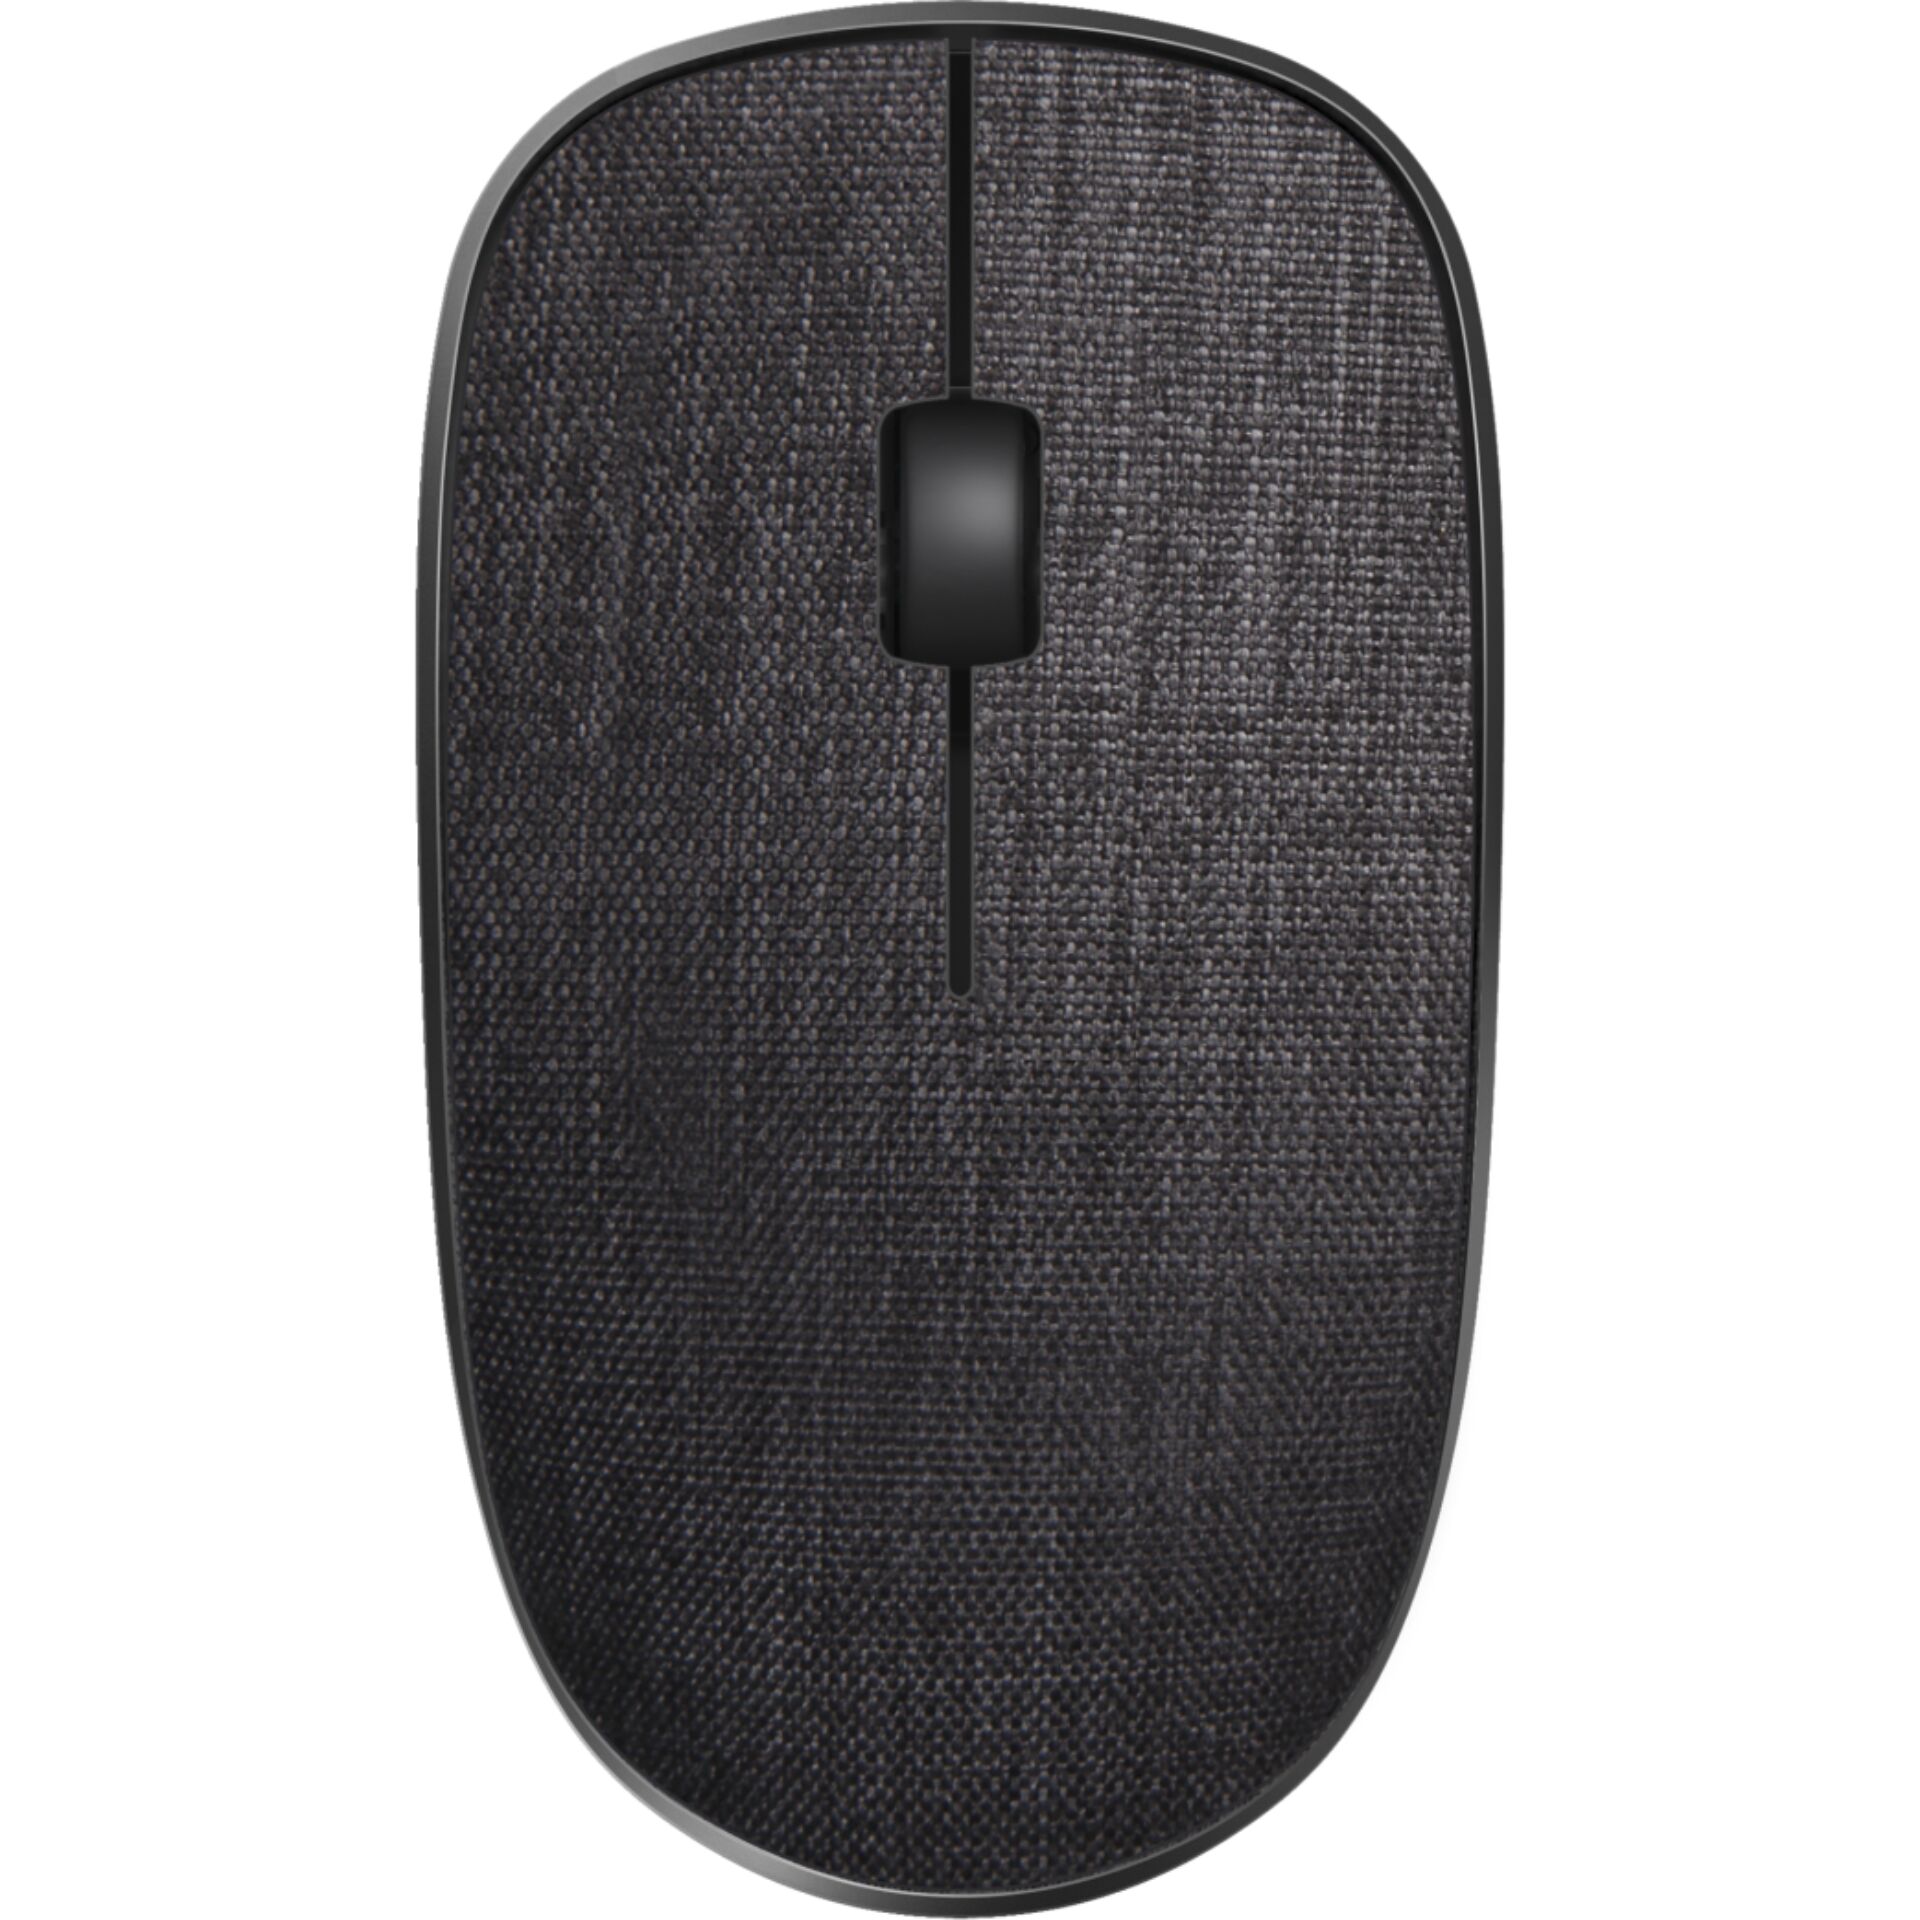 Rapoo M200 Multi-Mode Wireless Mouse Black Textile